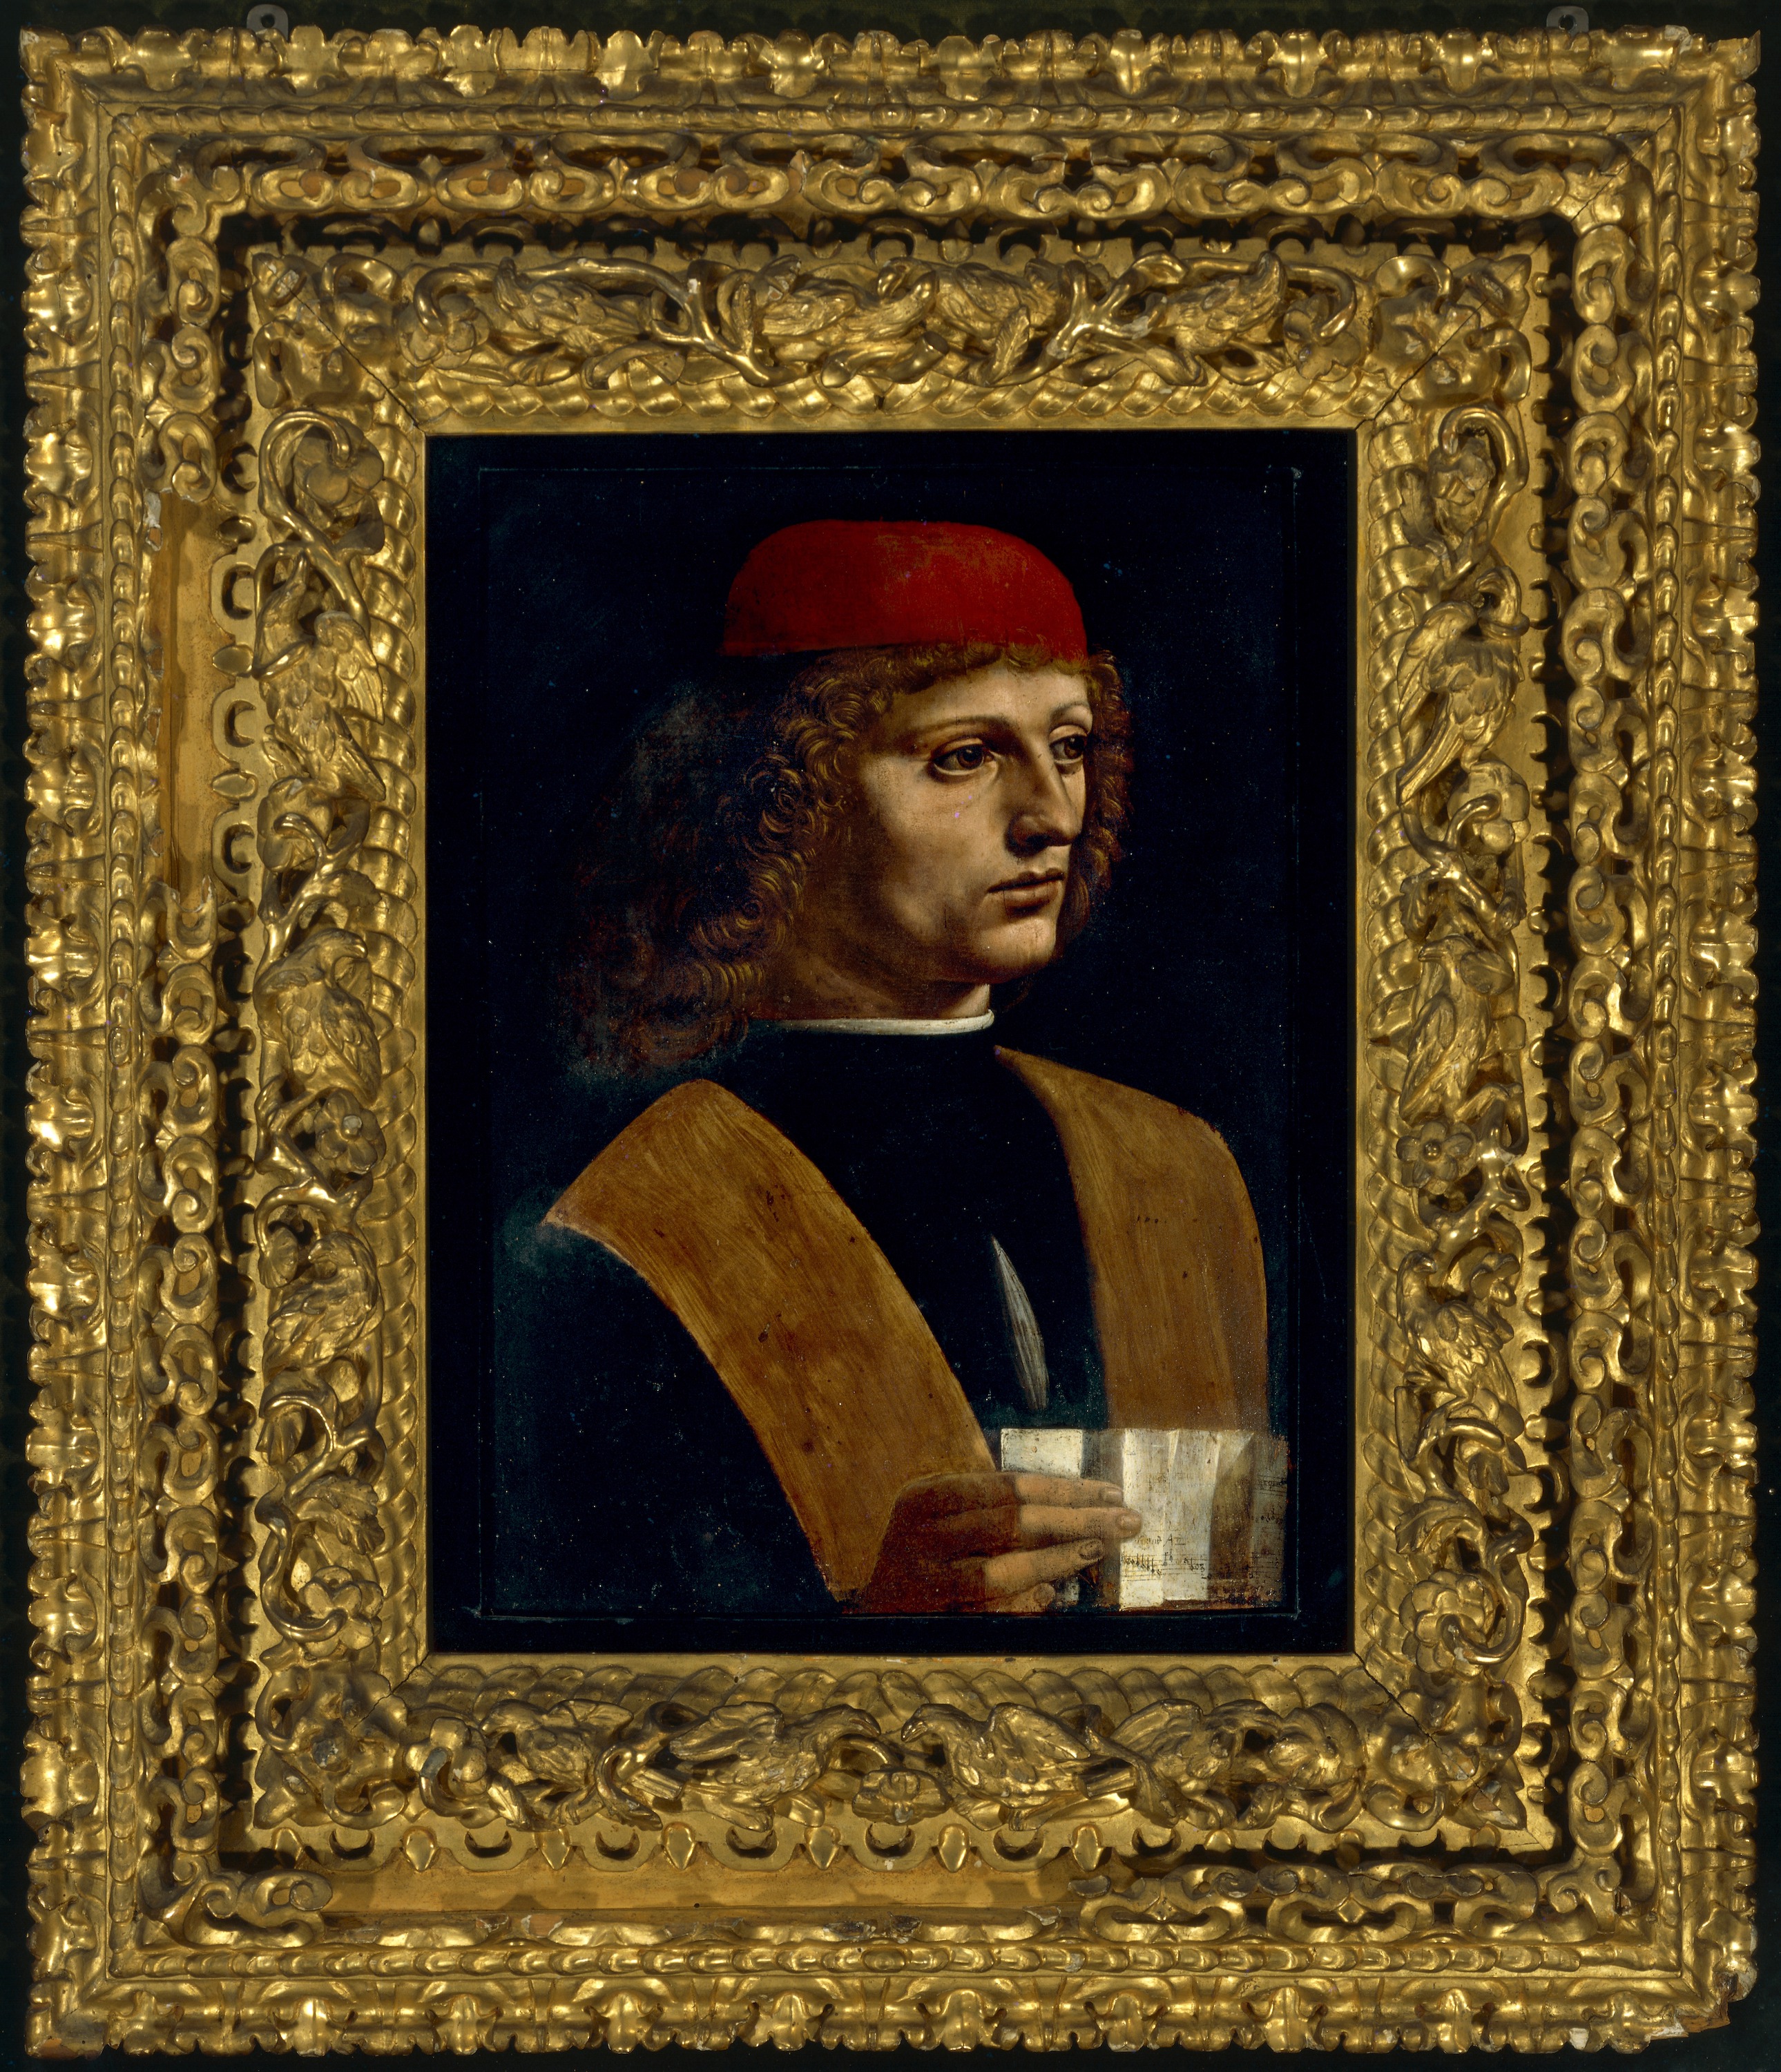 Portrait of a Musician by Leonardo da Vinci - ca. 1483–1487 - 44.7 x 32 cm Pinacoteca Ambrosiana